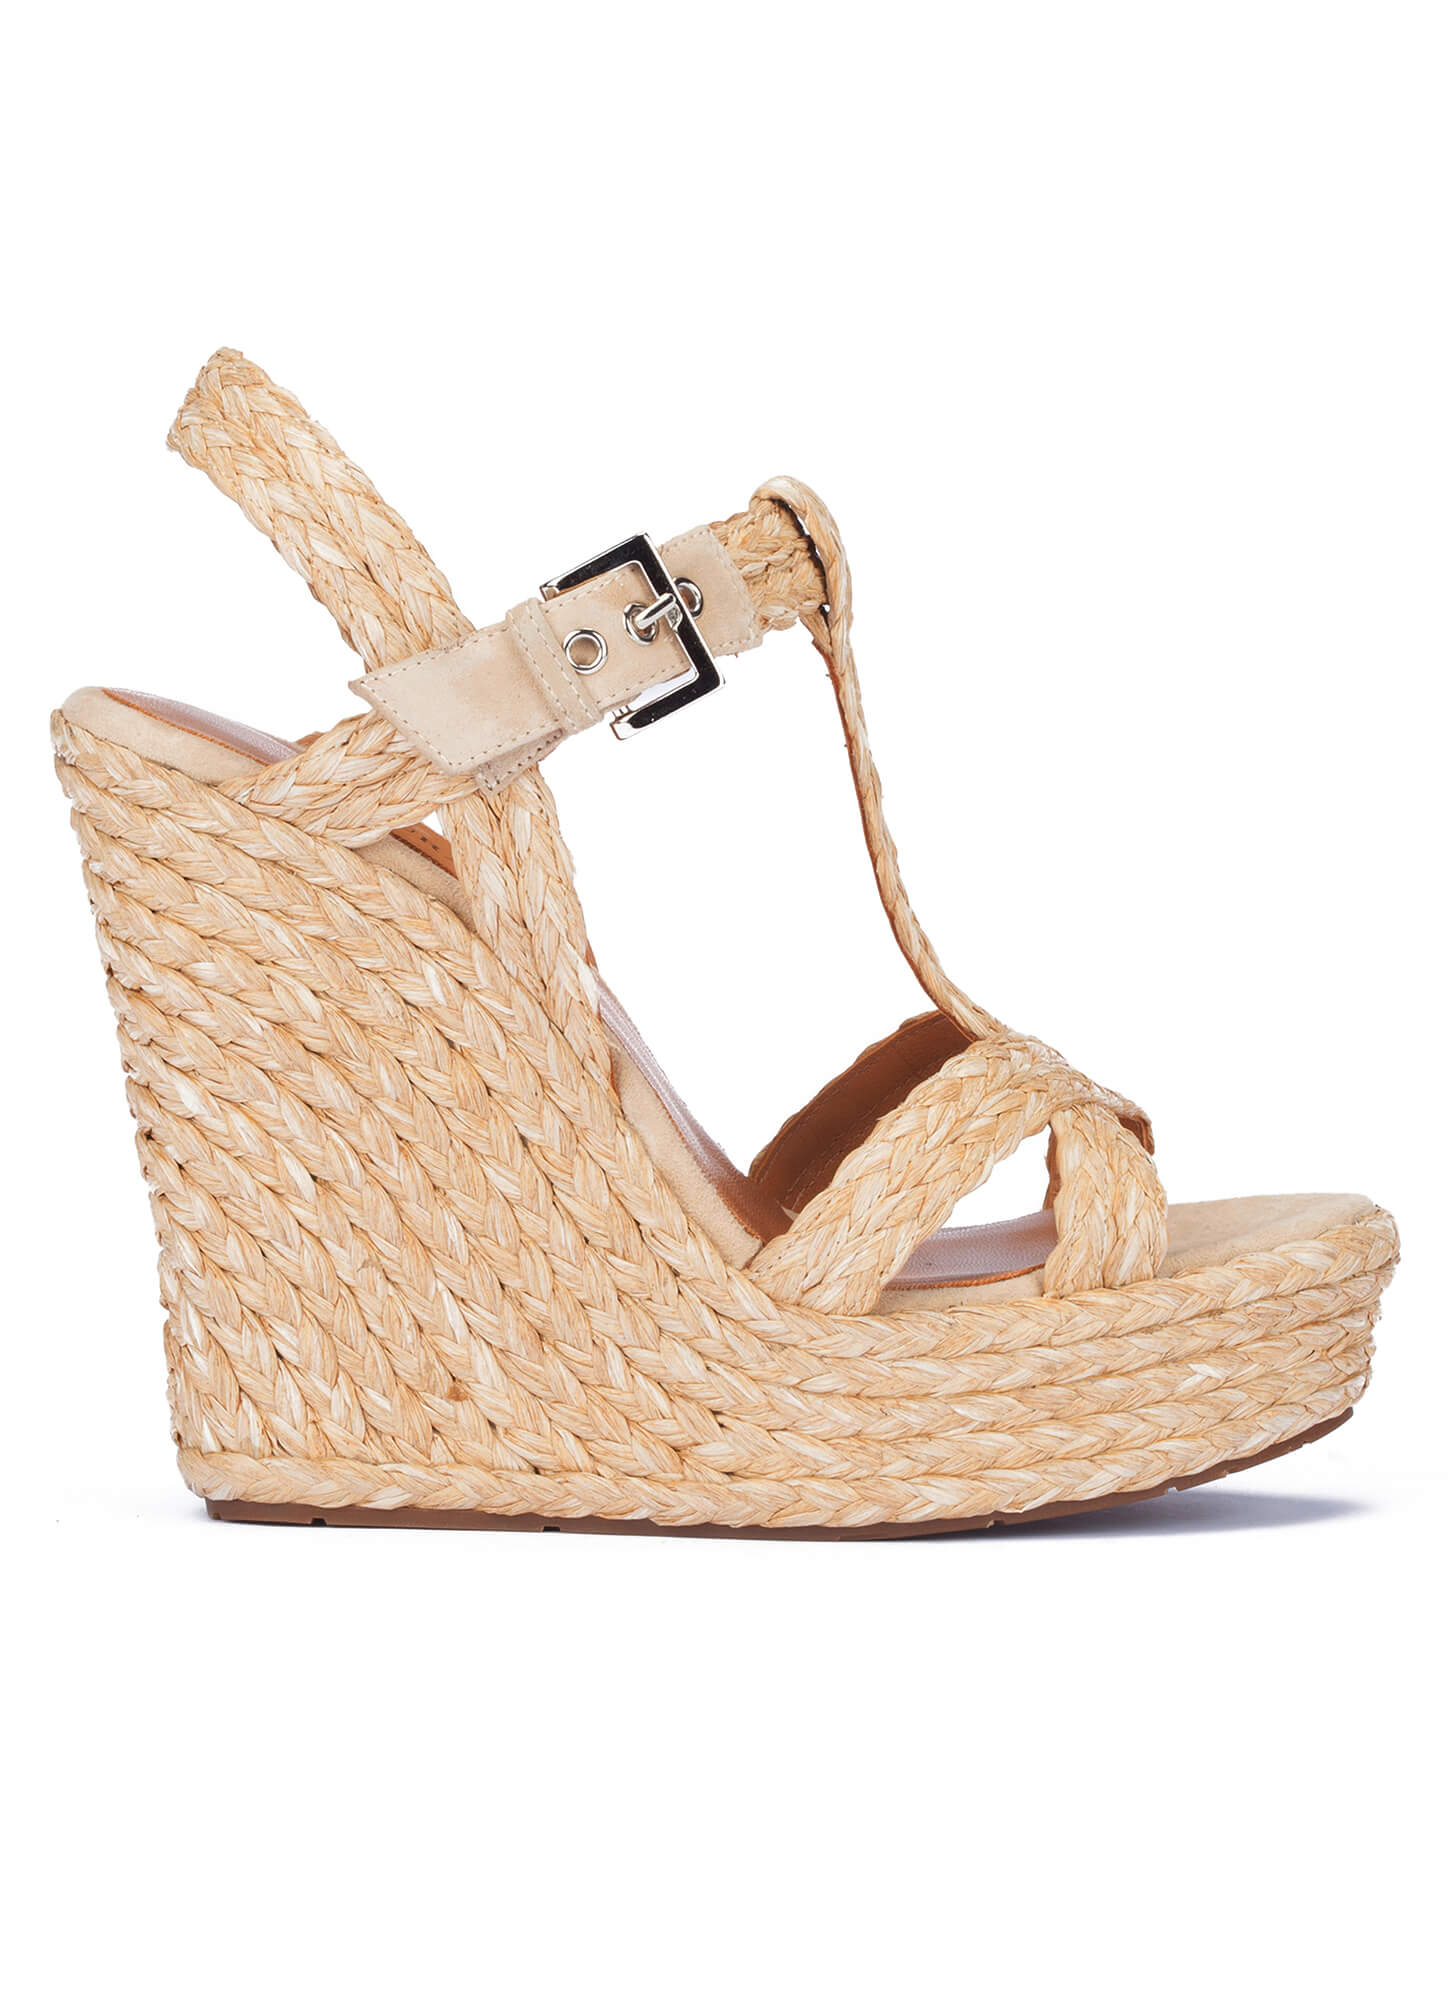 Espadrille sandals in sand raffia - online shoe store Pura Lopez . PURA ...